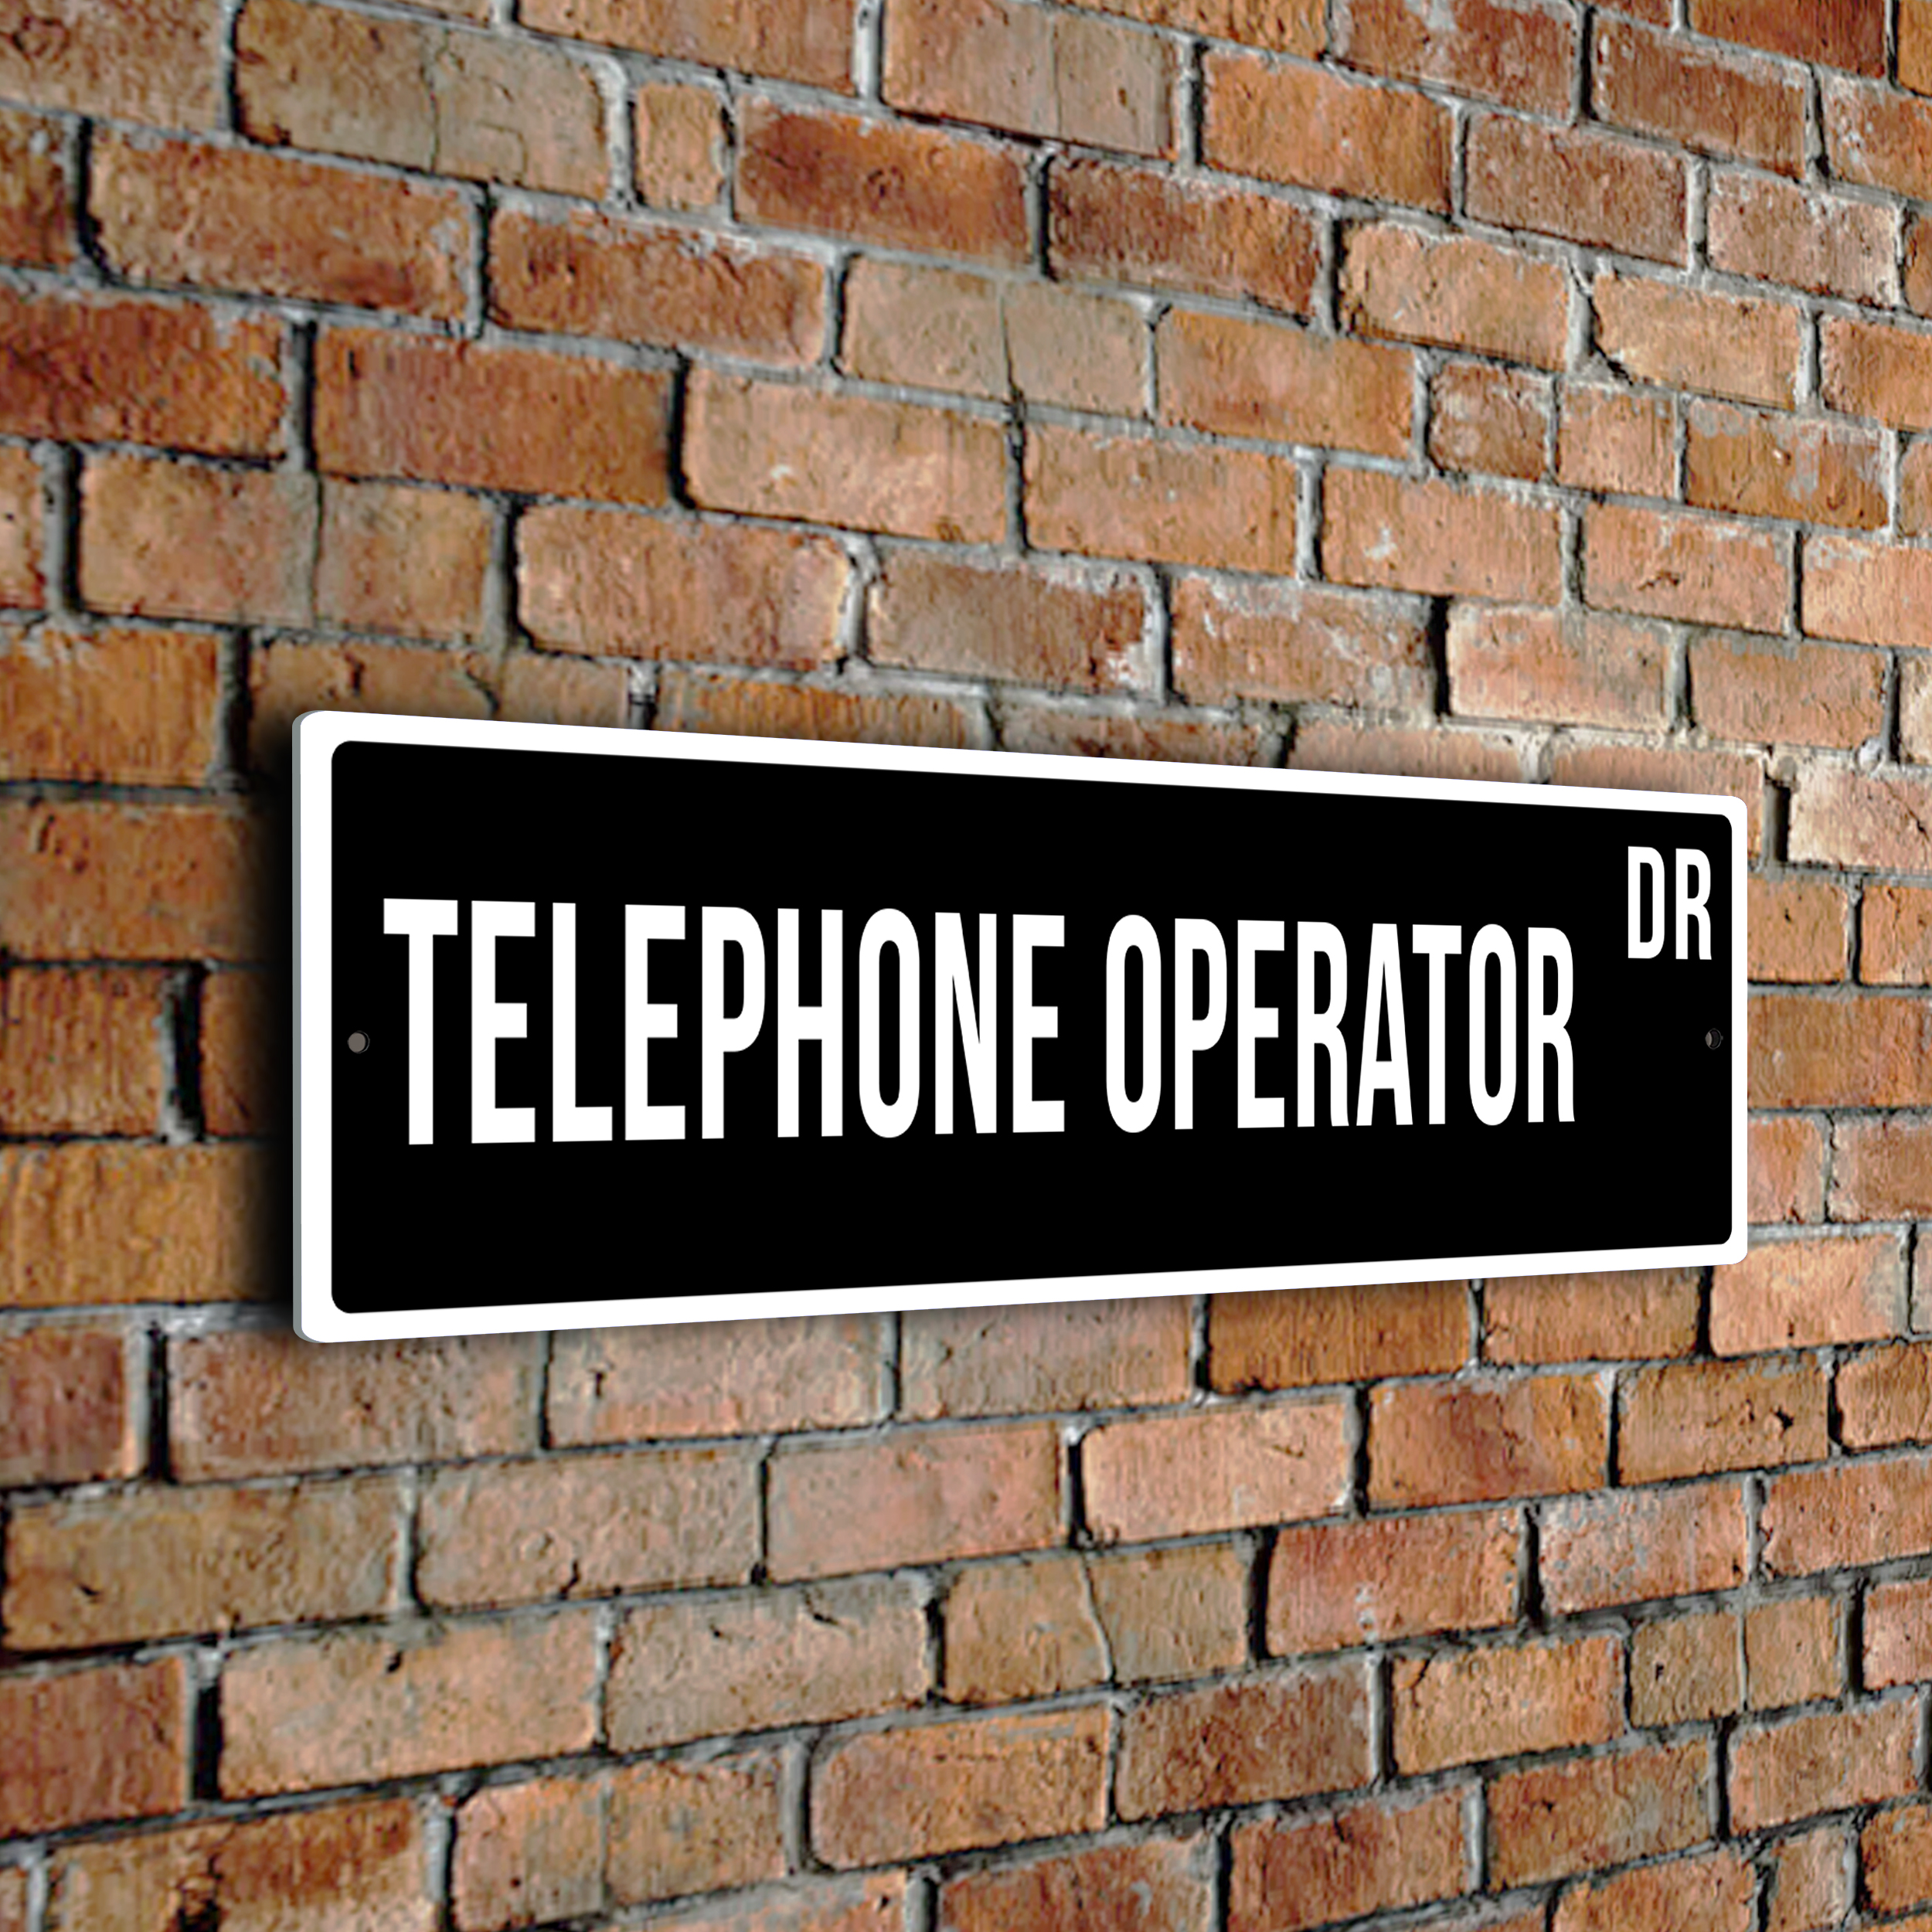 Telephone Operator street sign